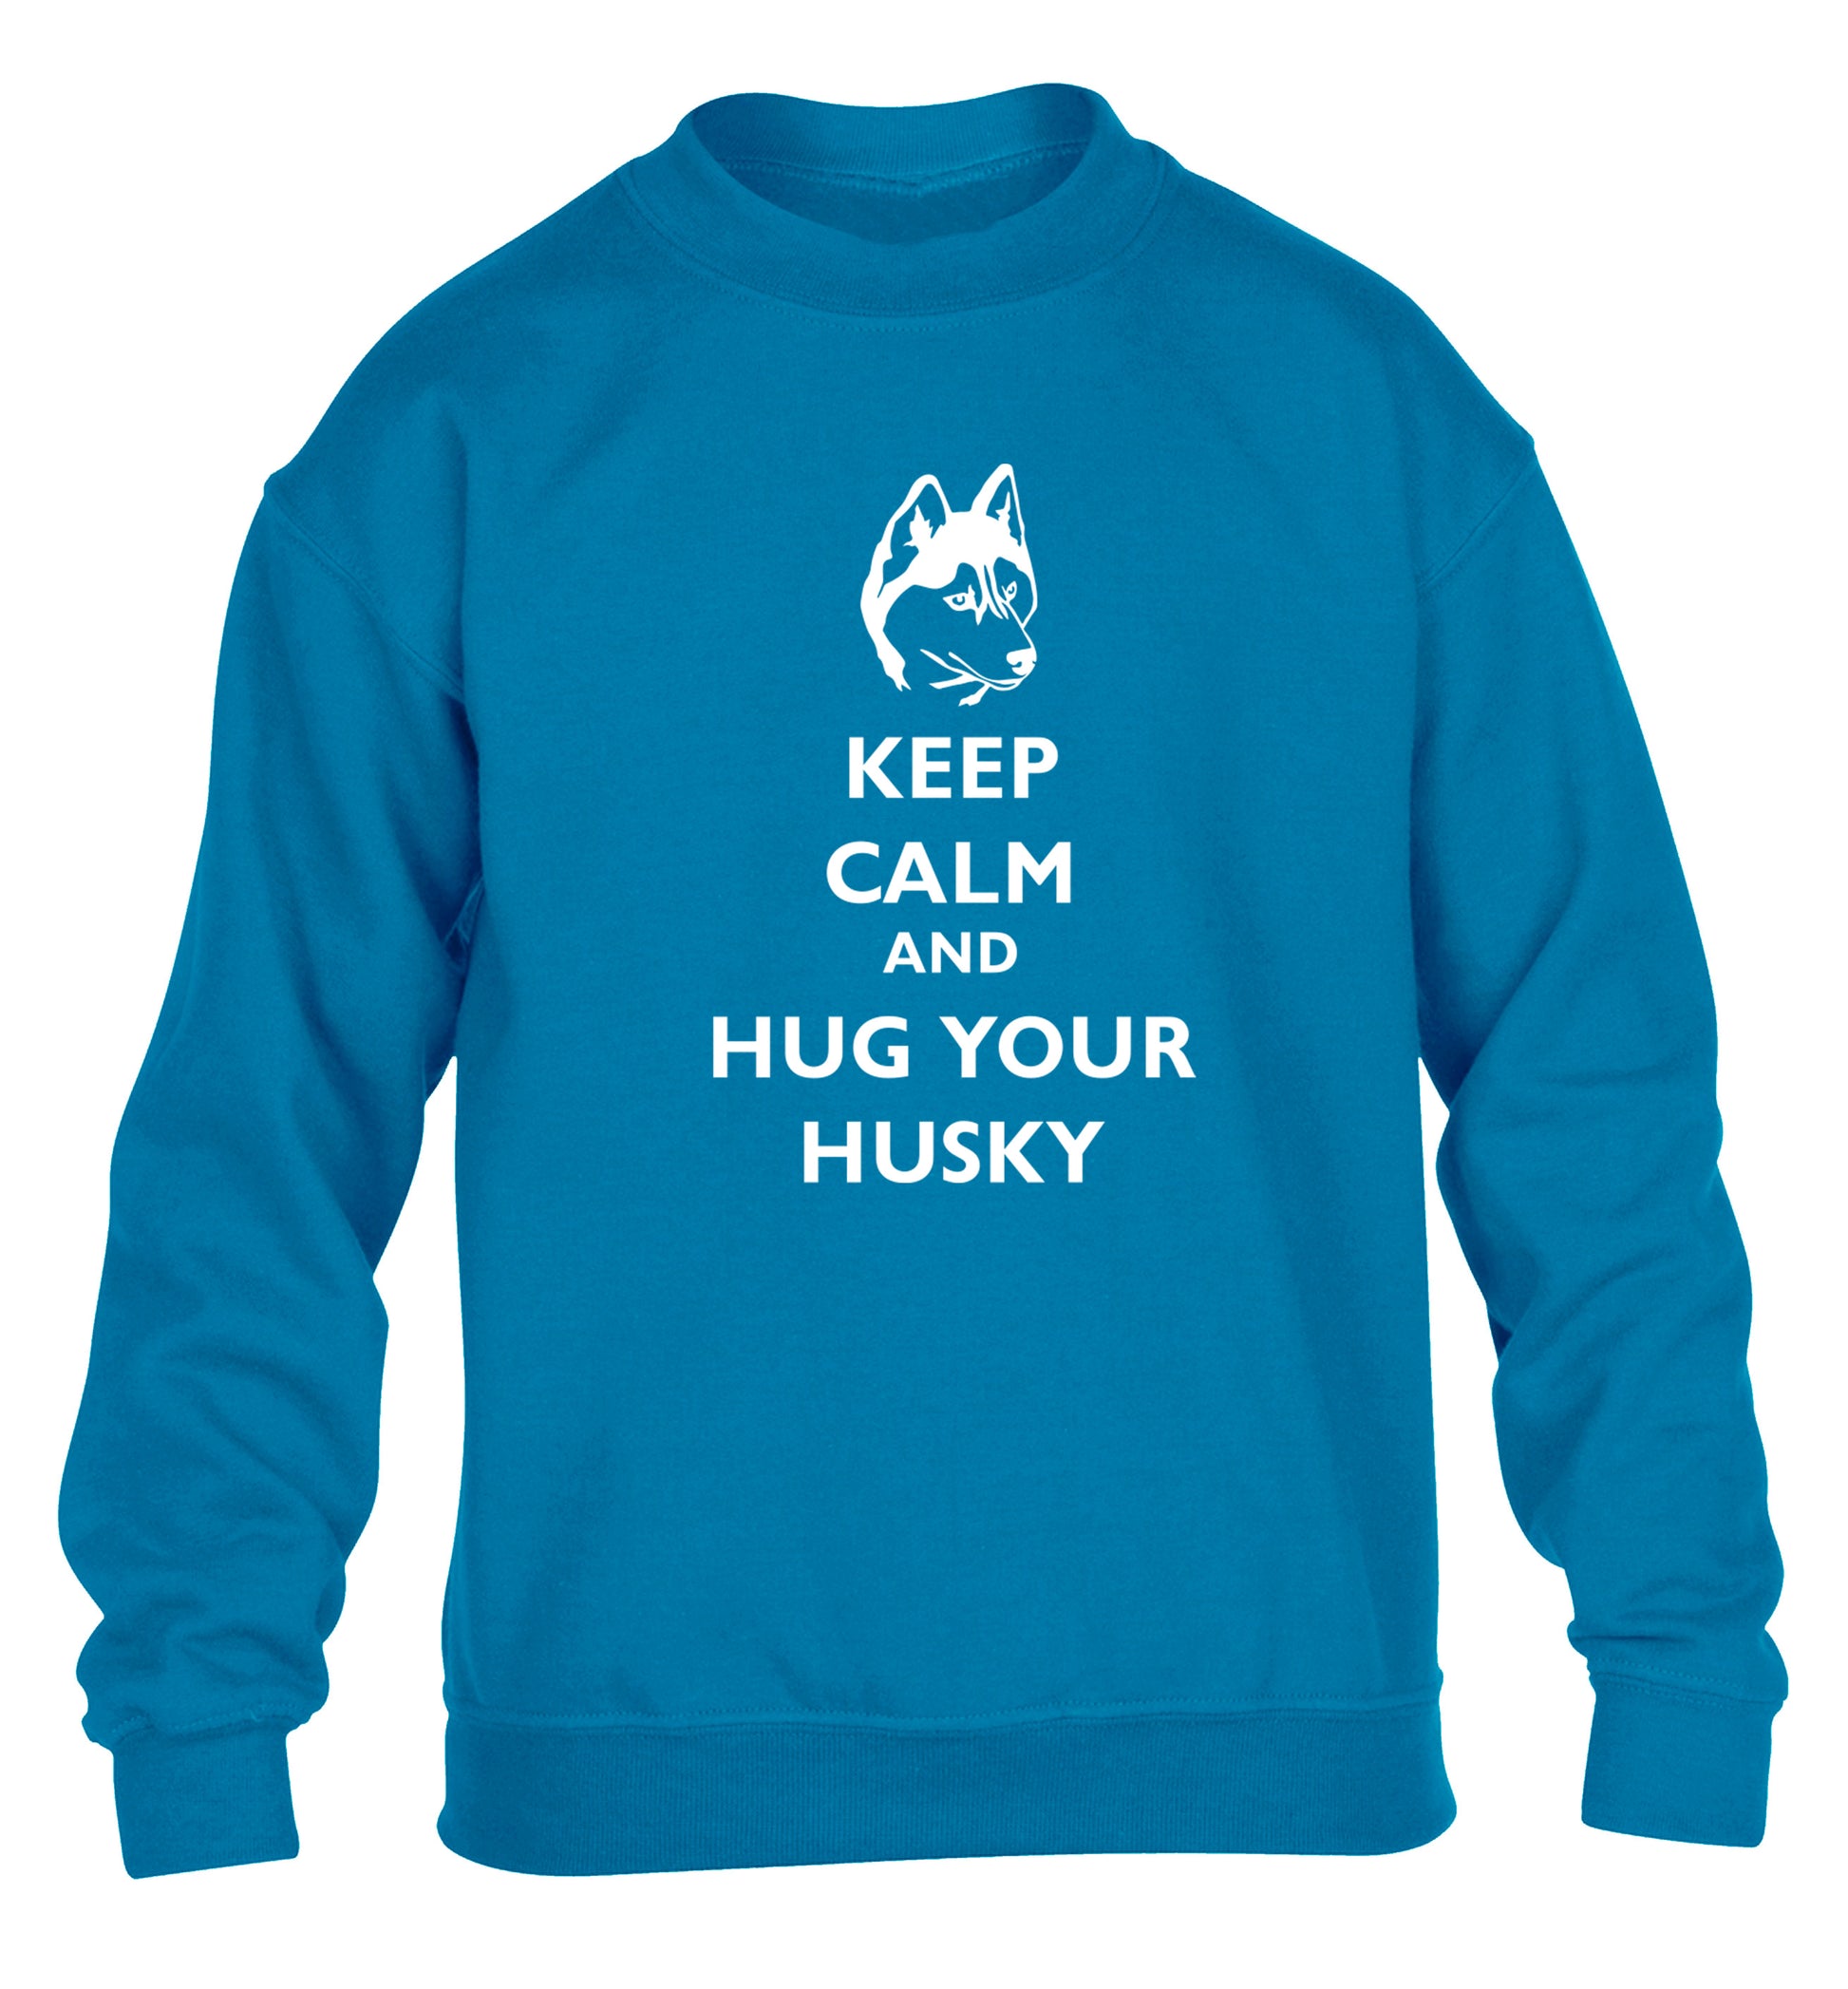 Keep calm and hug your husky children's blue sweater 12-13 Years